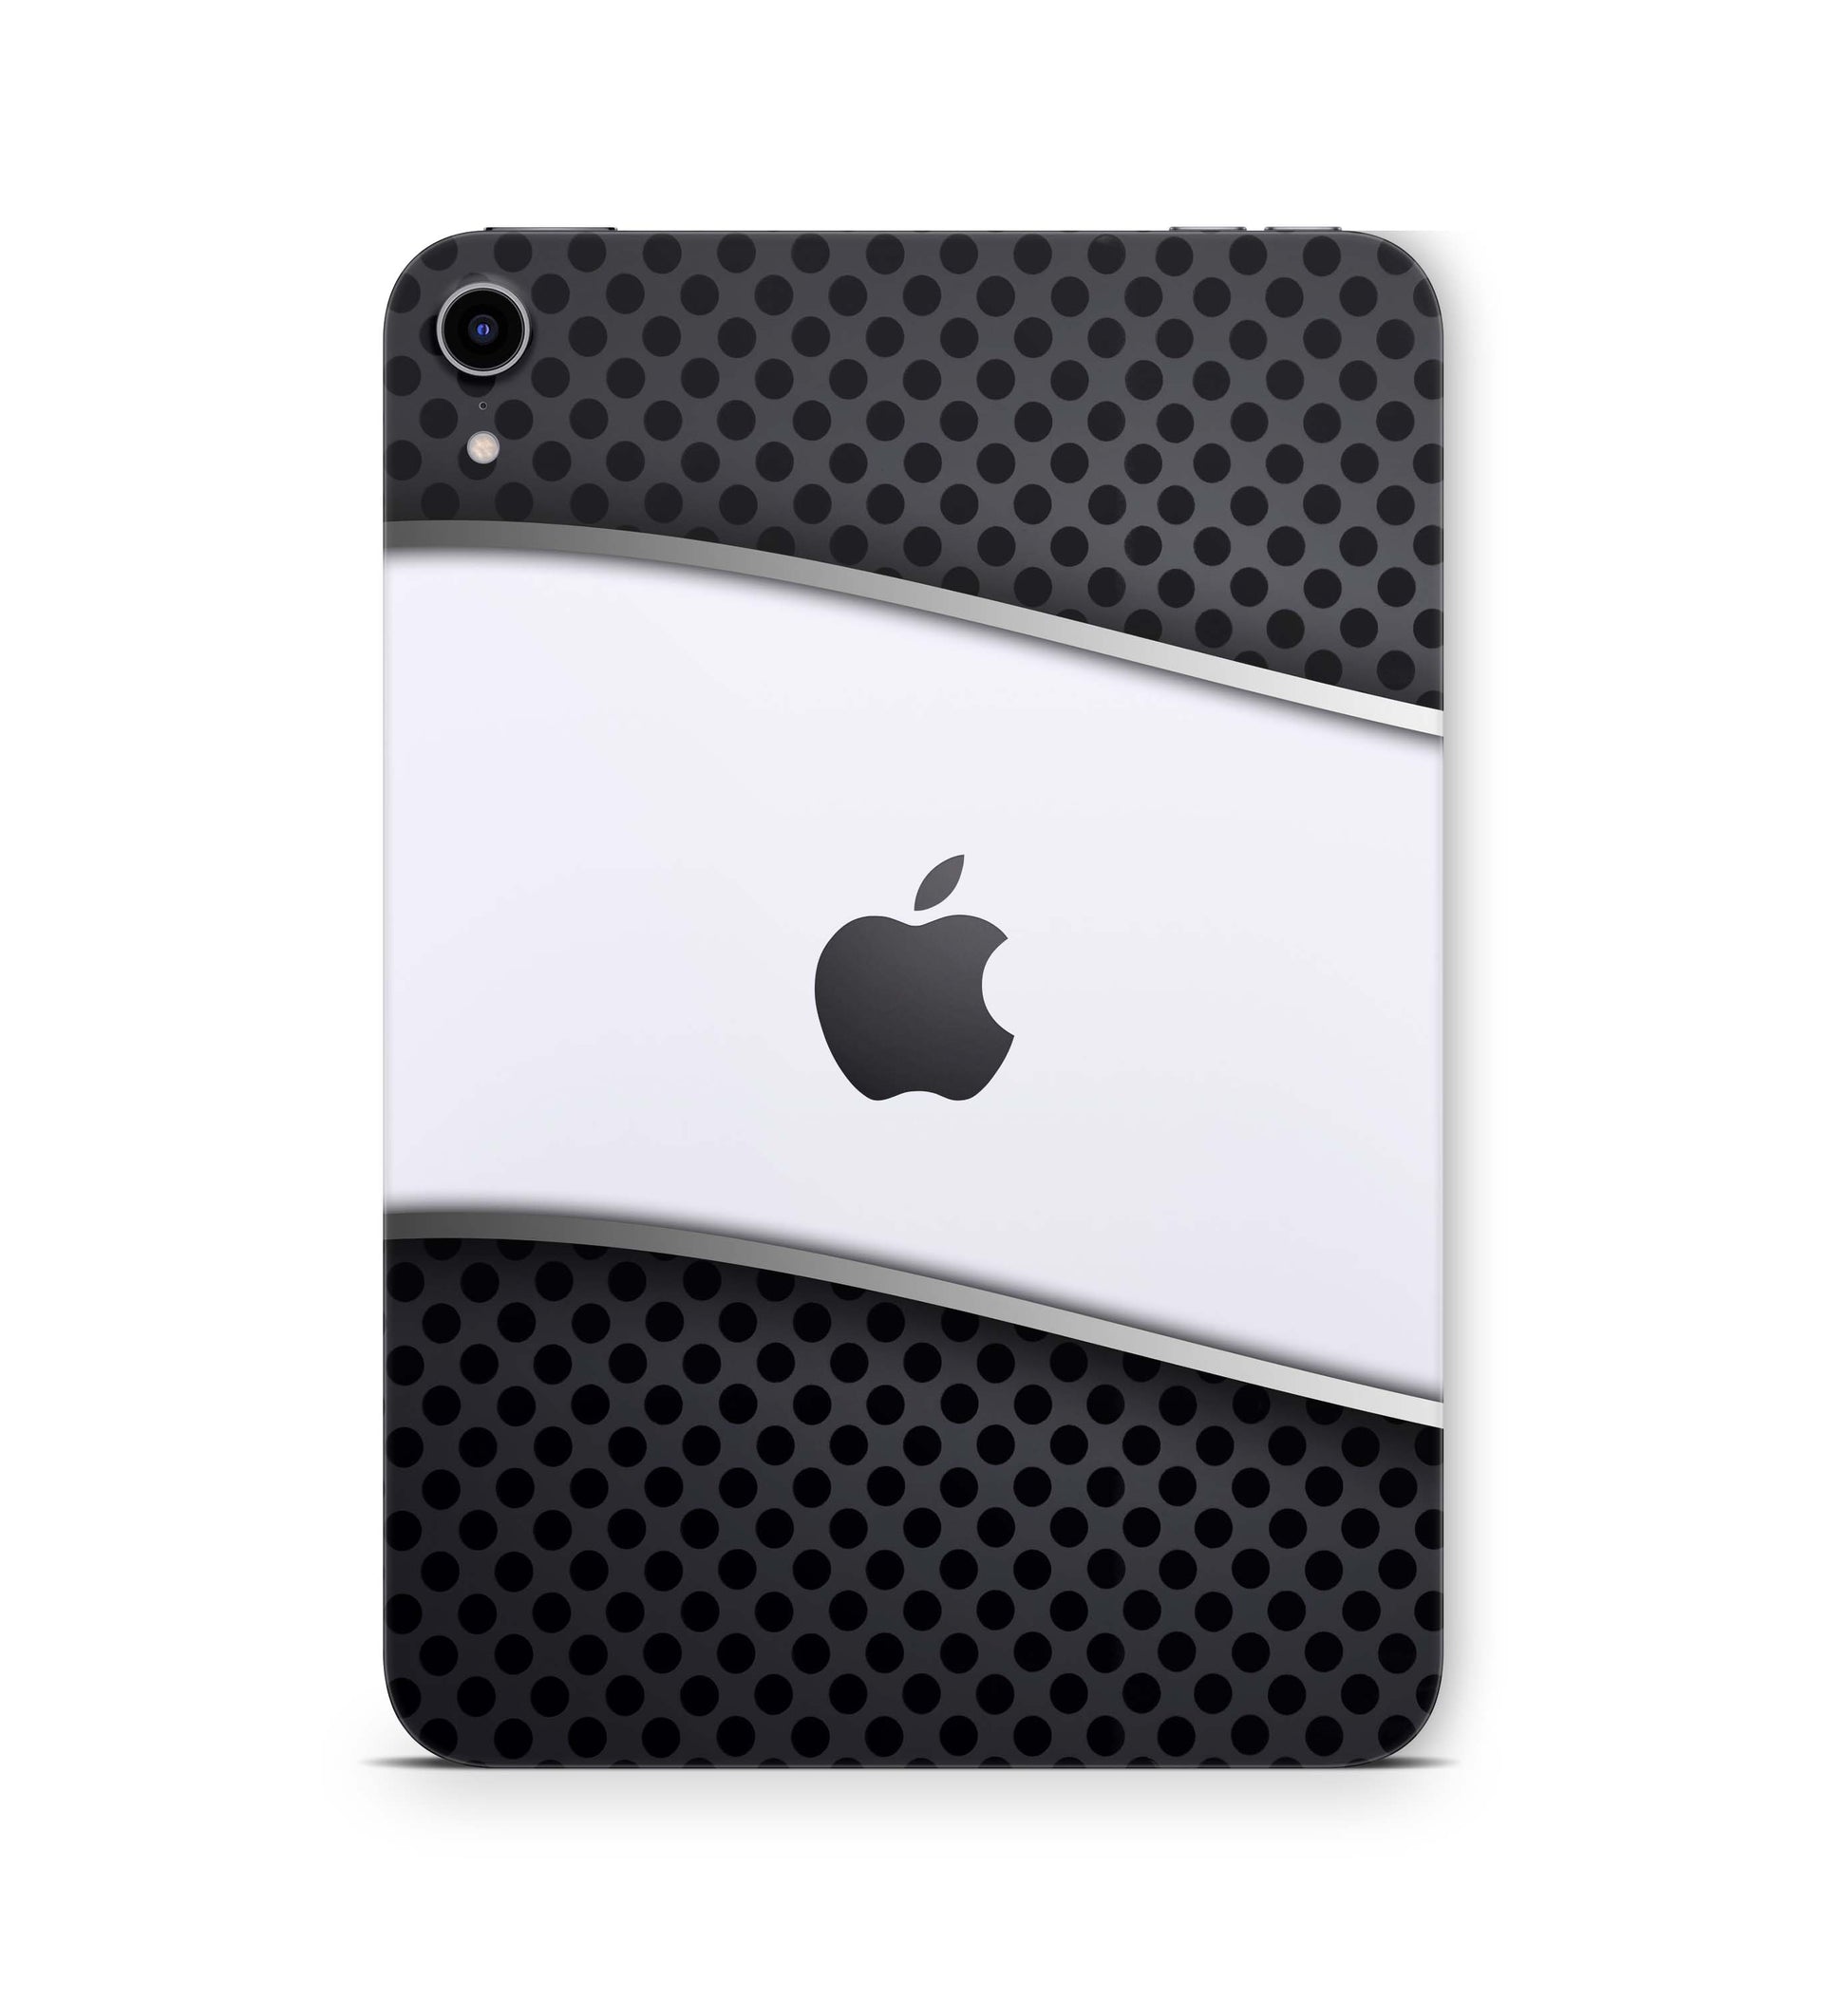 Apple iPad Skin Design Cover Folie Vinyl Skins & Wraps für alle iPad Modelle Aufkleber Skins4u Metal-Stripe  